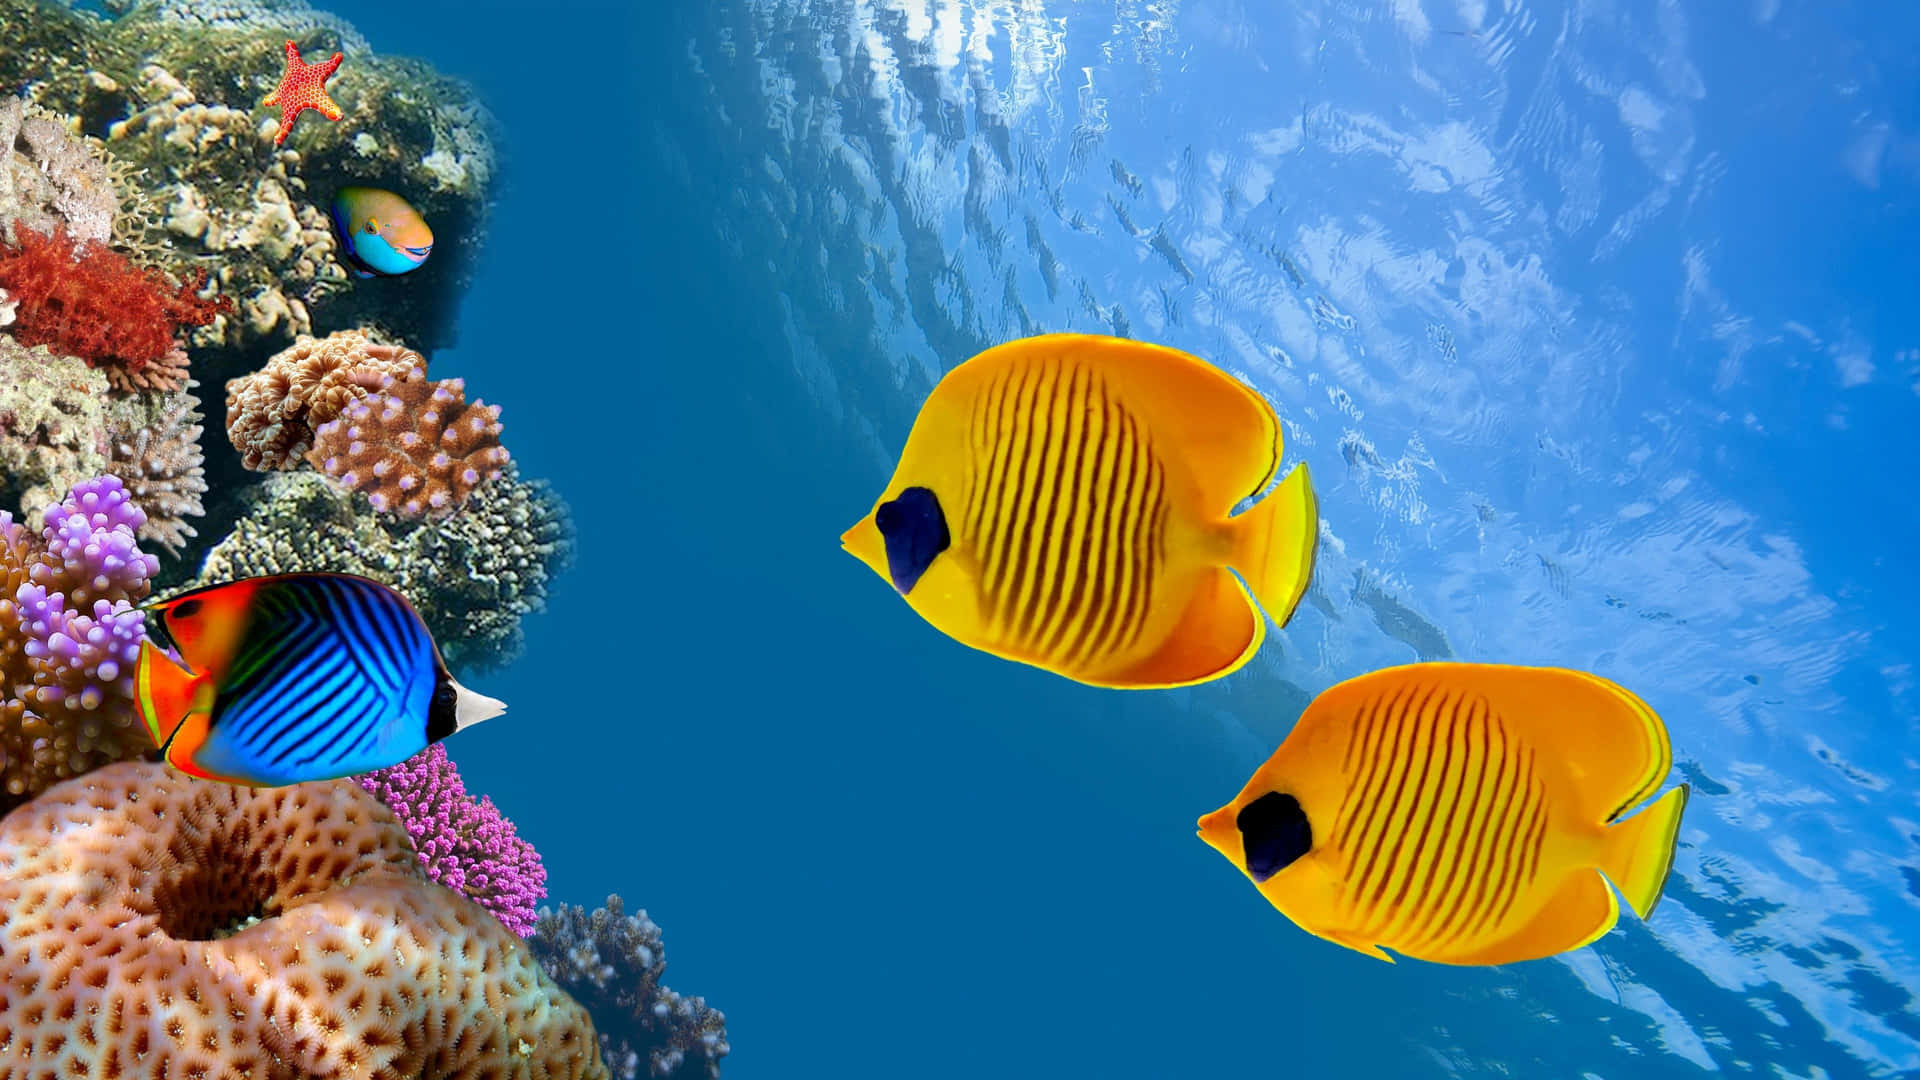 A colorful school of Live Fish swim through the ocean depths Wallpaper